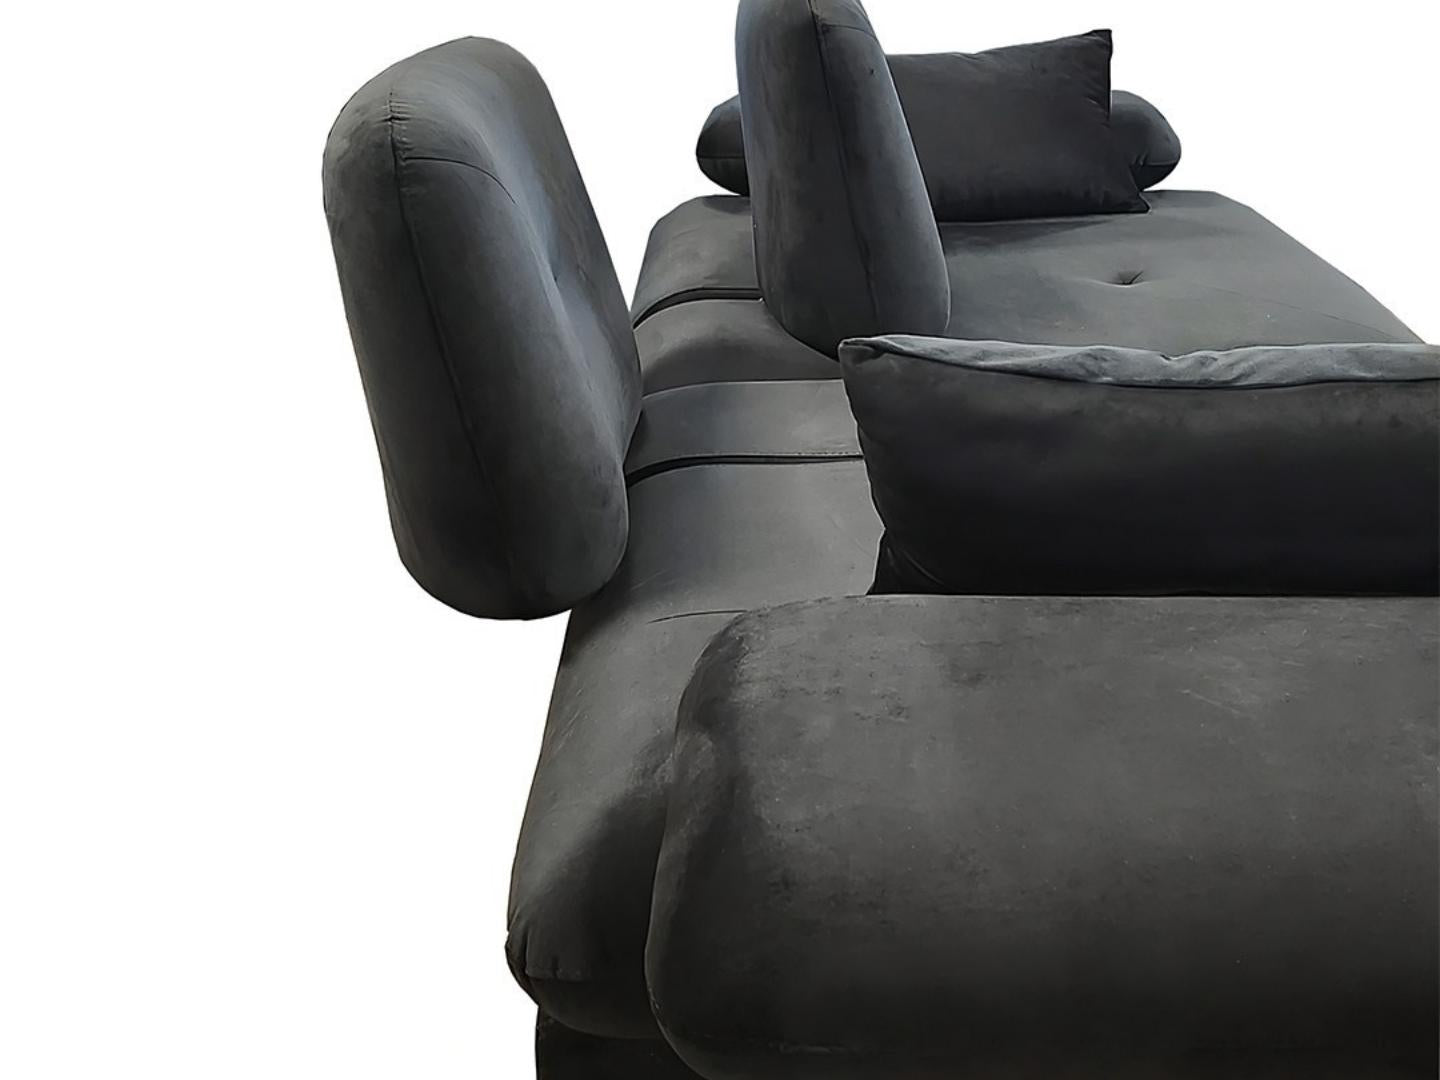 black 3 seater sofa bed - Lux Furniture